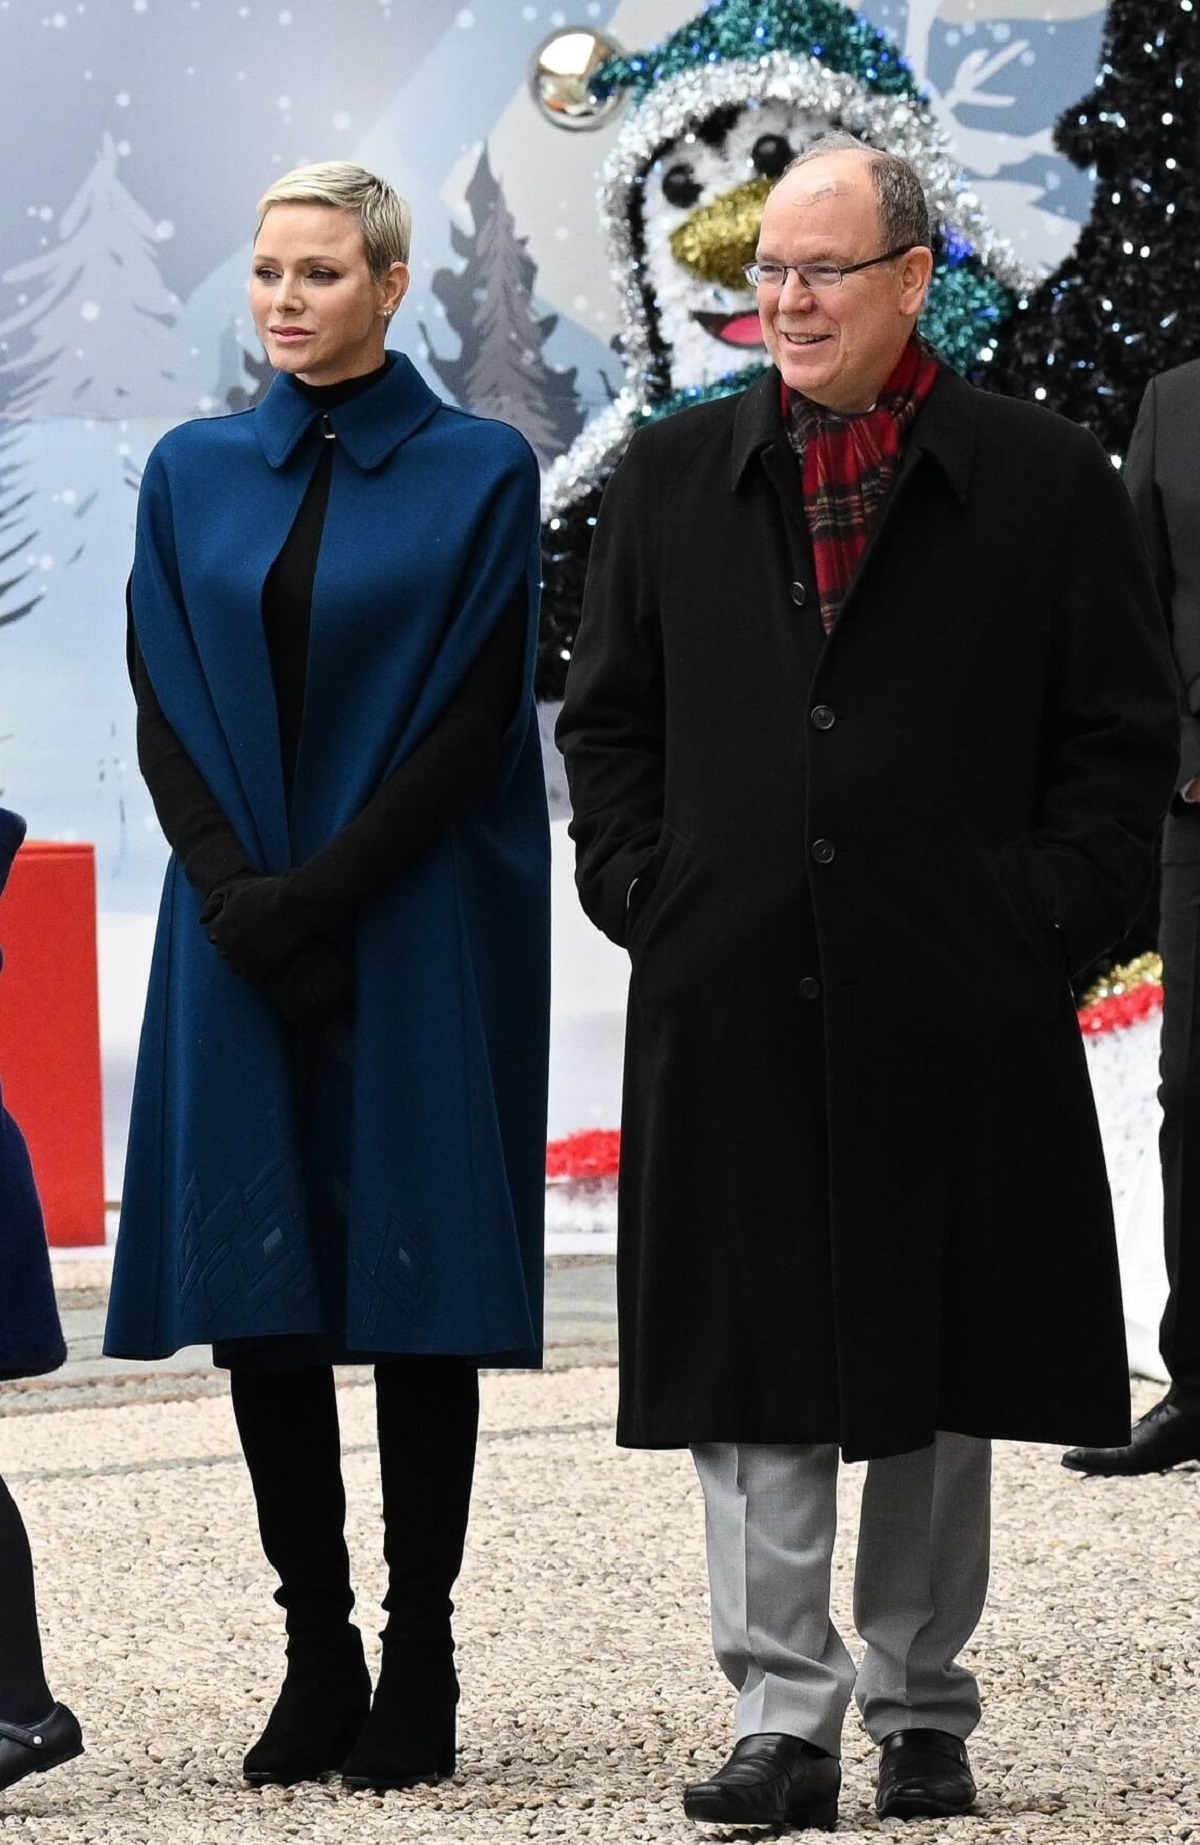 Princess Charlene of Monaco, Prince Albert II of Monaco attend a Christmas tree event in 2022